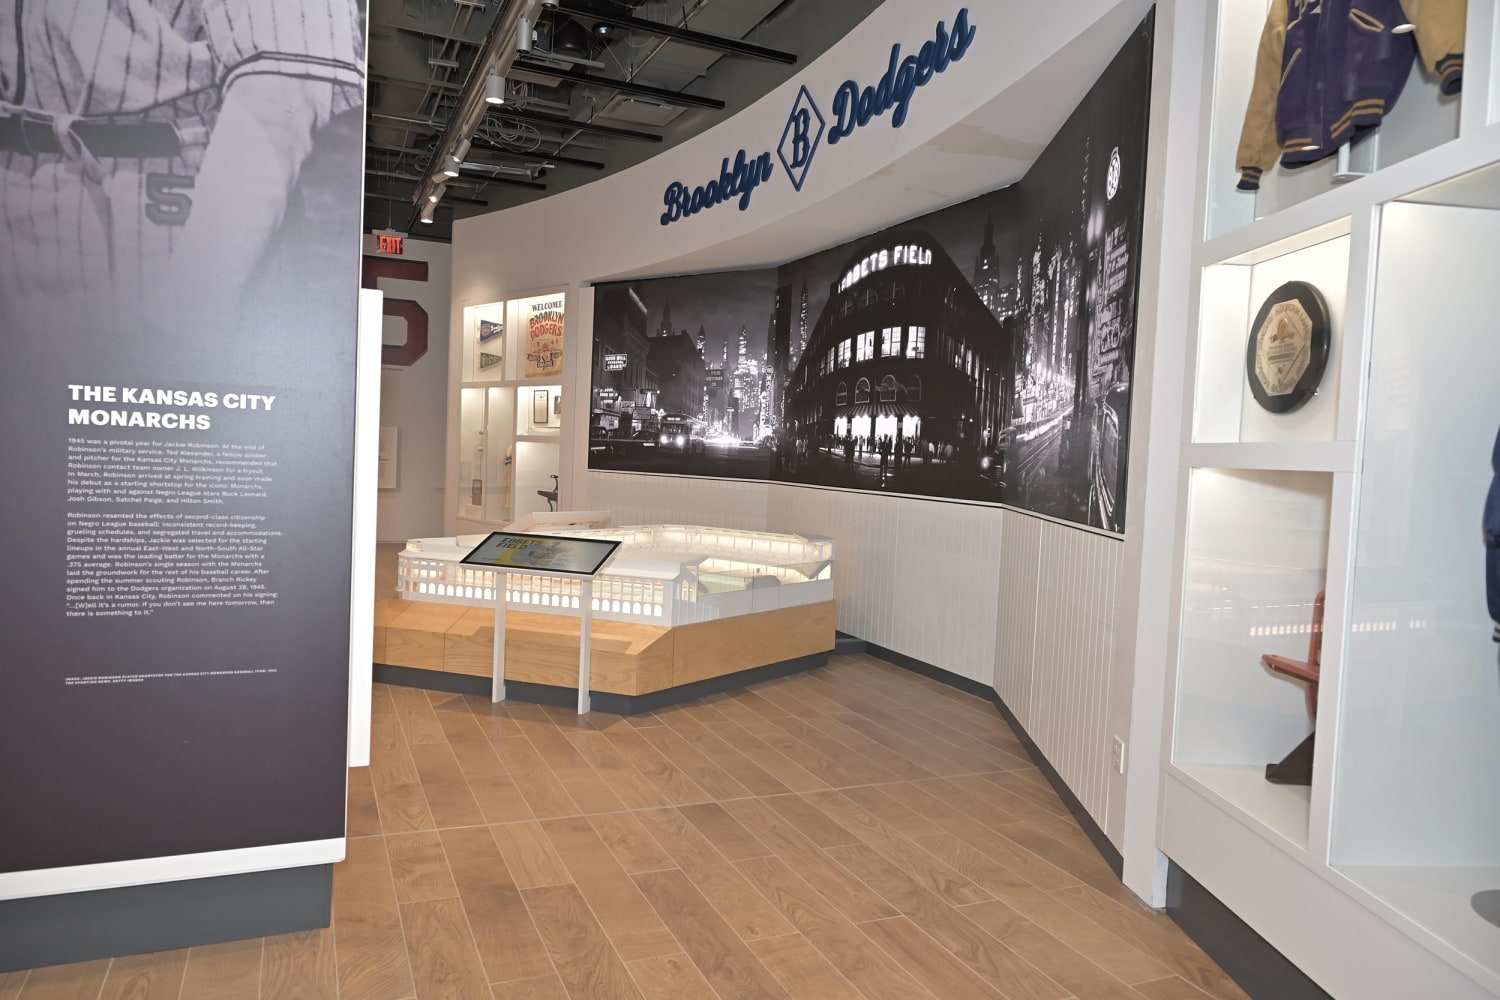 New DC exhibit celebrates 75 years since Jackie Robinson's